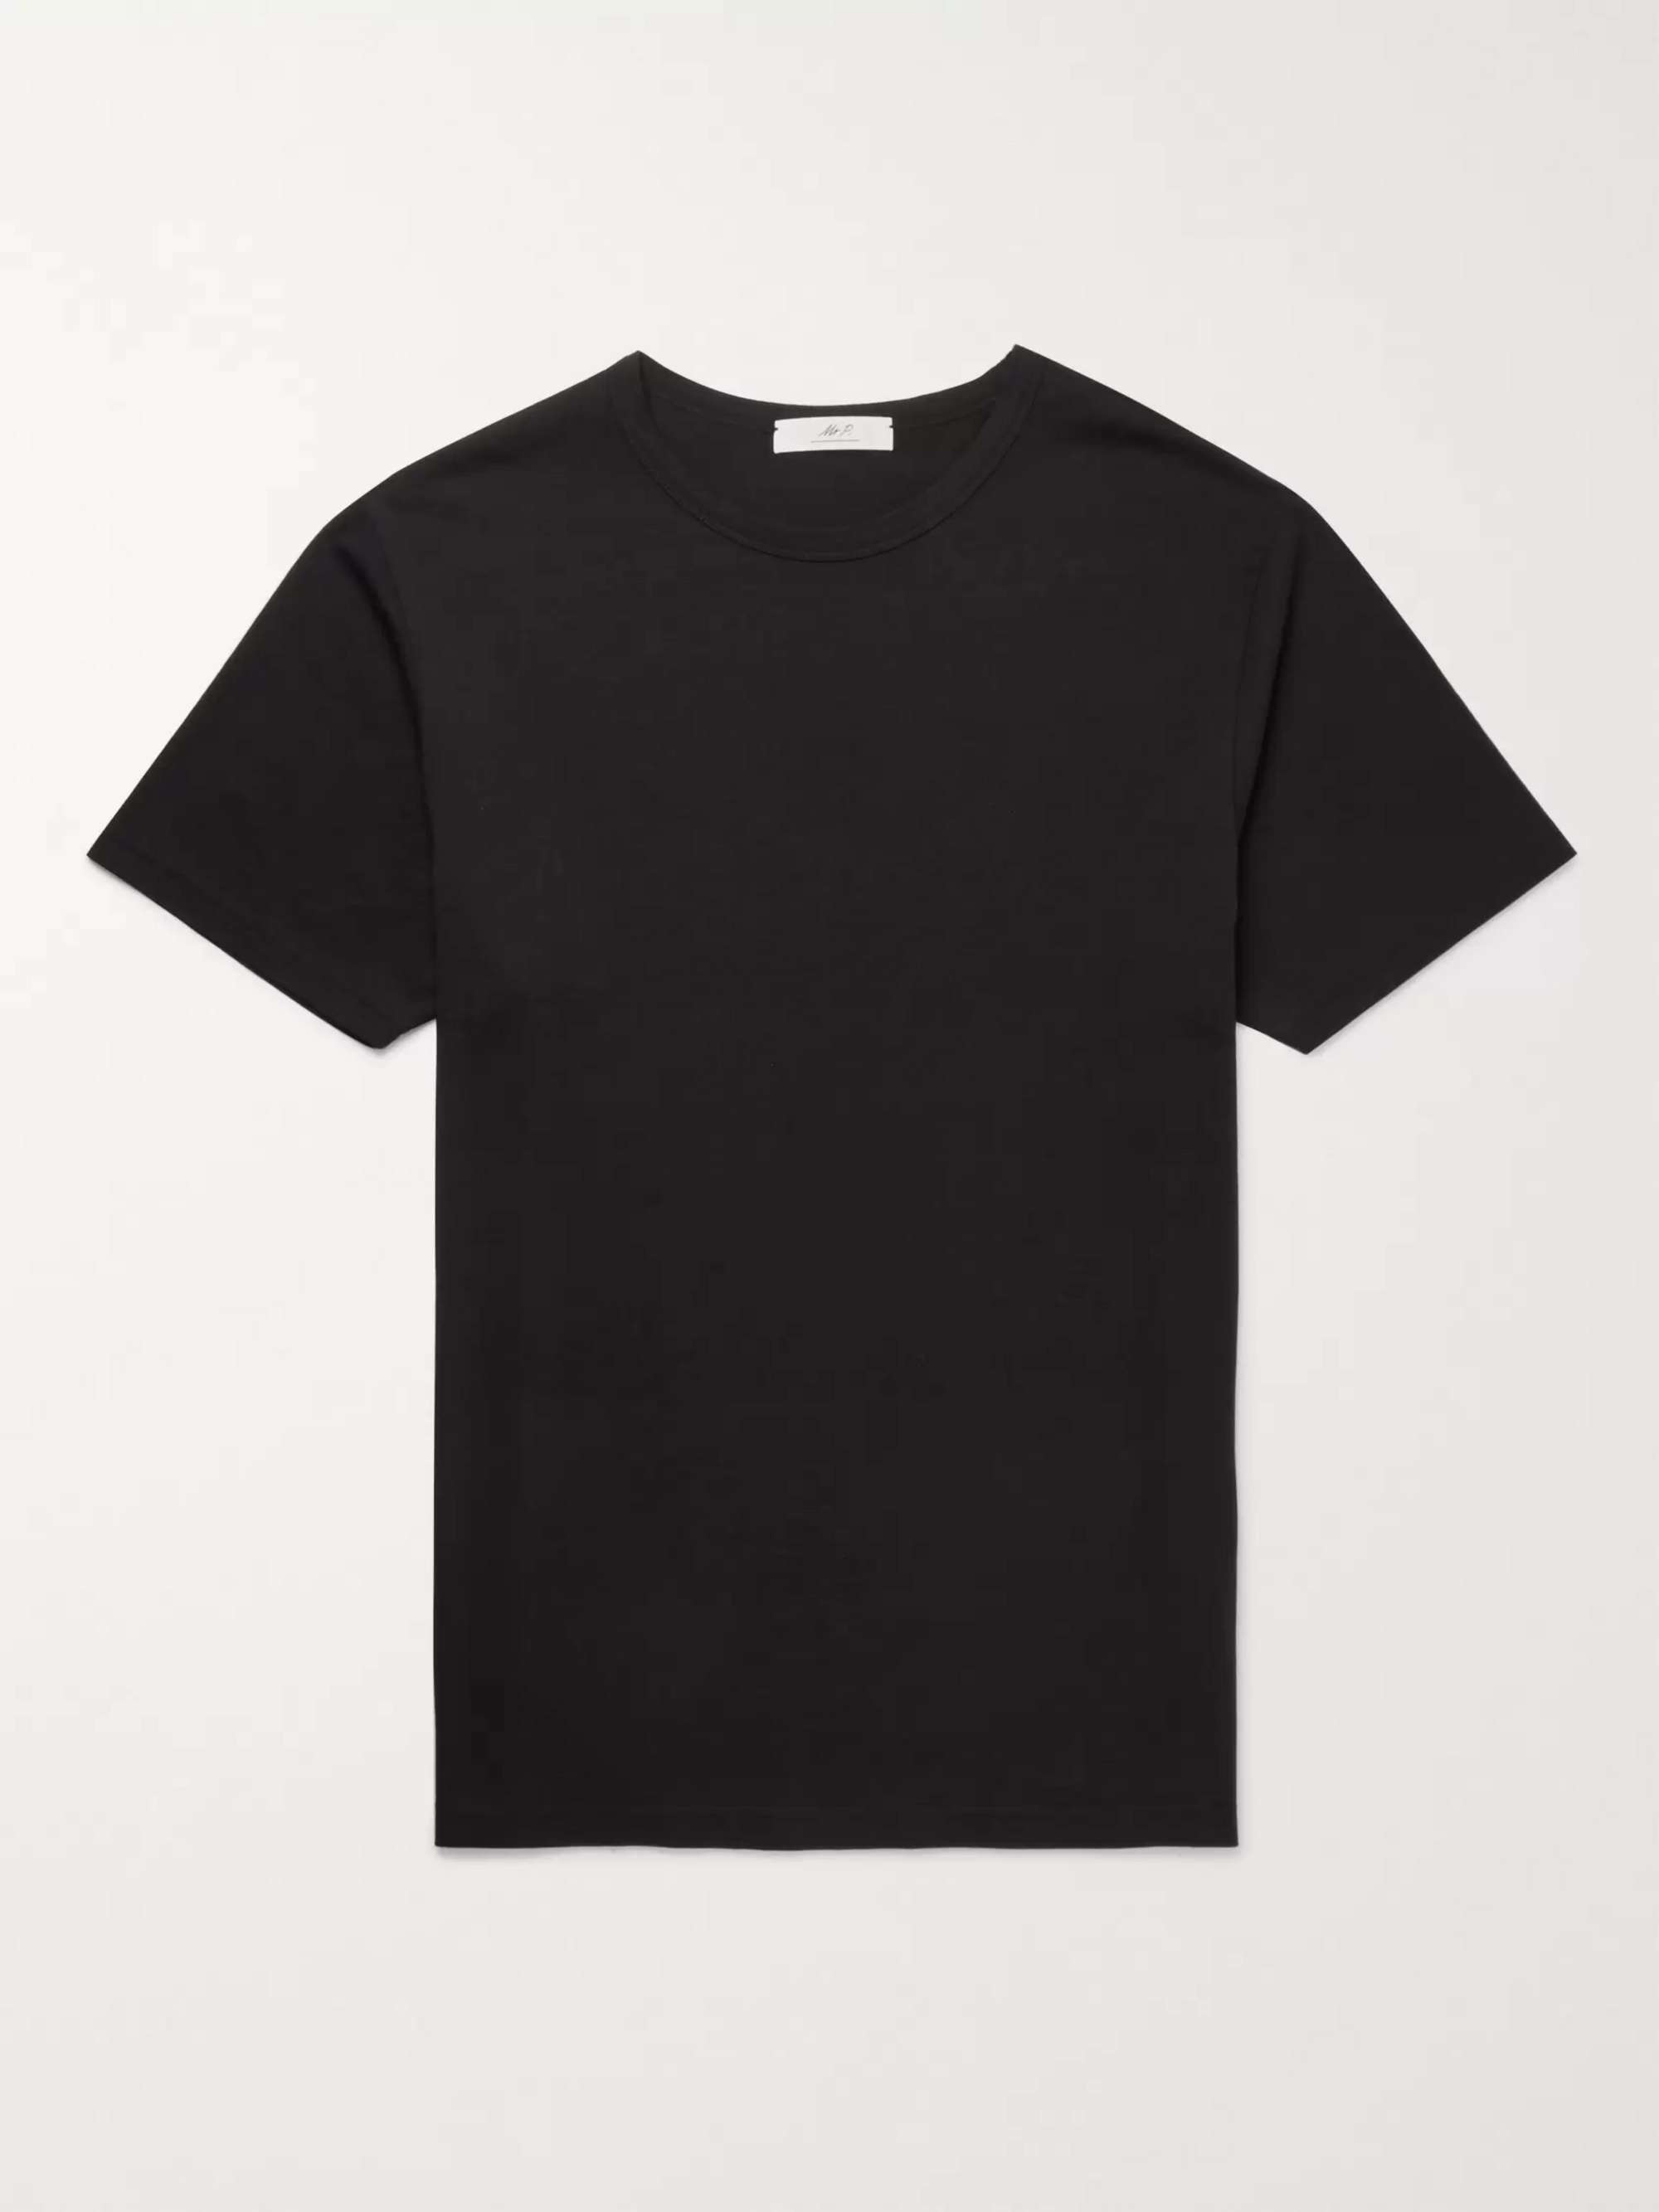 dose Delegate exhibition Black Cotton-Jersey T-Shirt | MR P. | MR PORTER